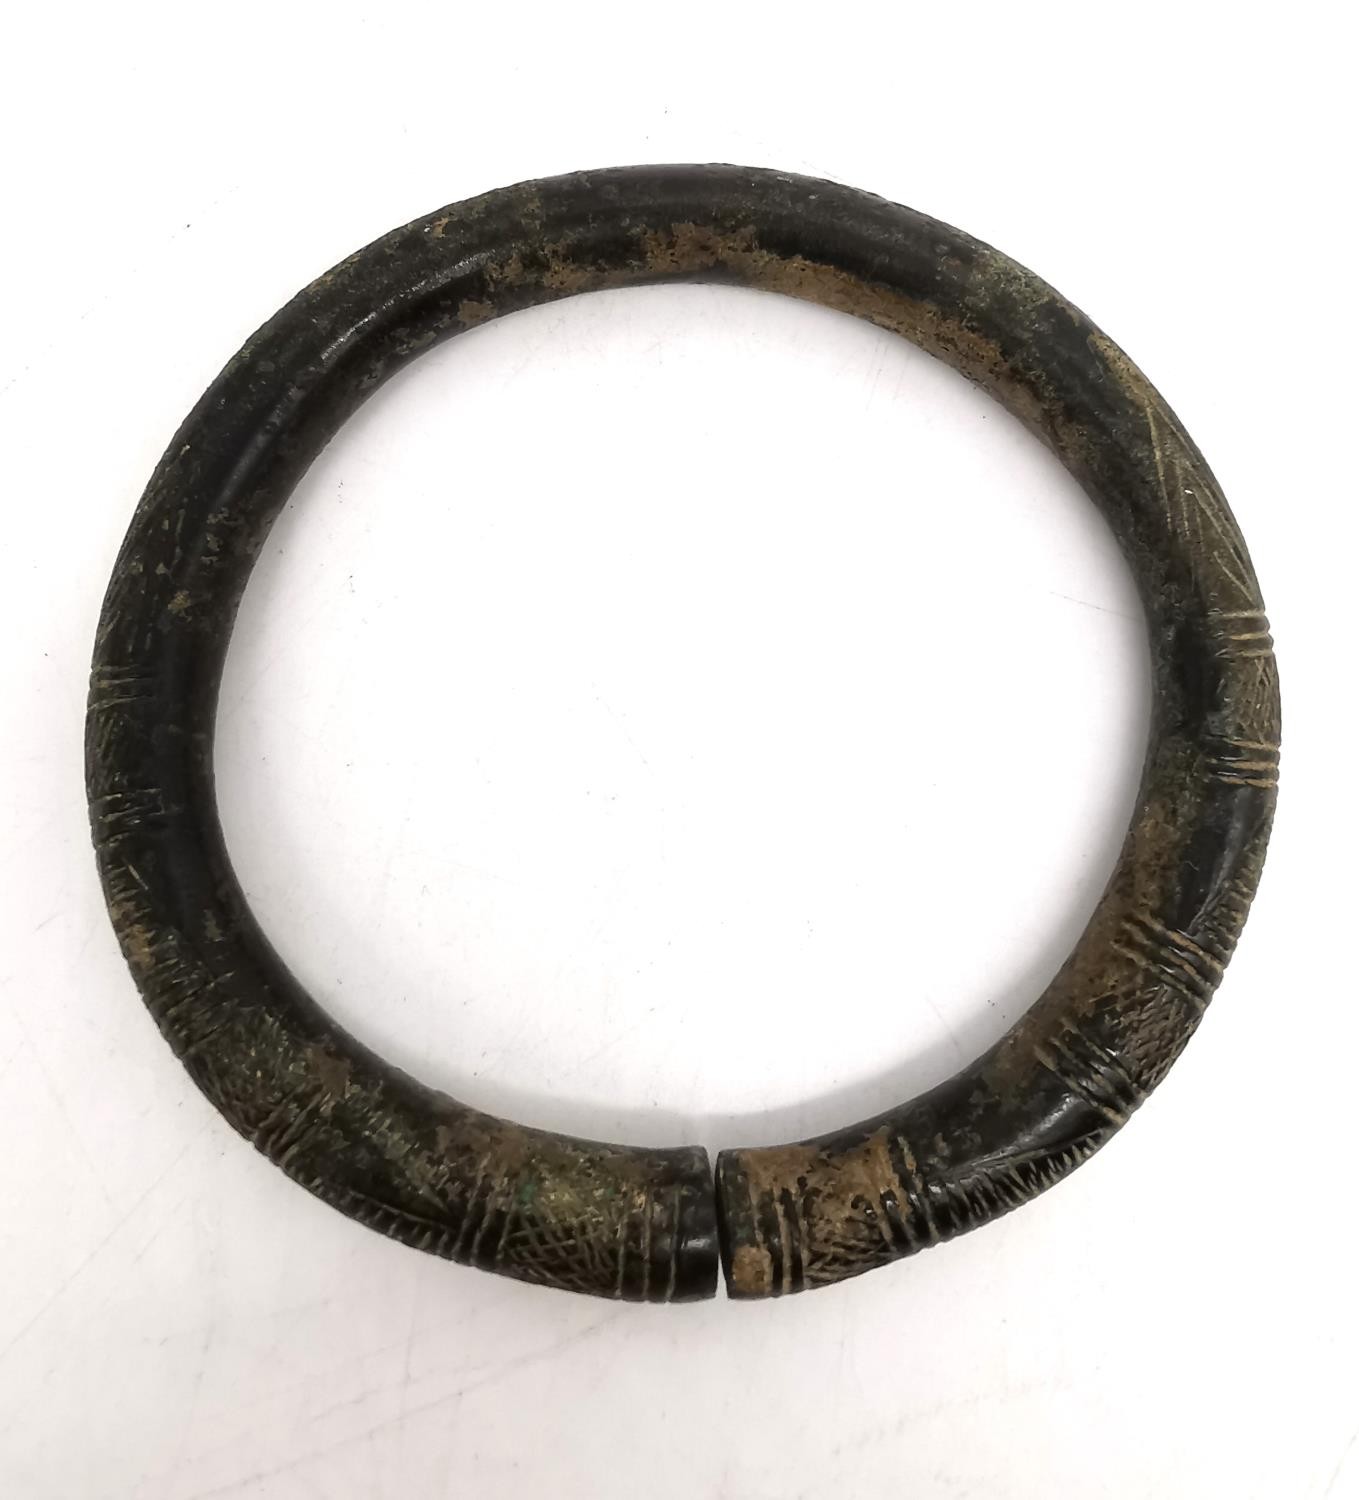 An ancient Iranian bronze torque arm bracelet/necklace with incised design. Diameter 12cm, - Image 6 of 6